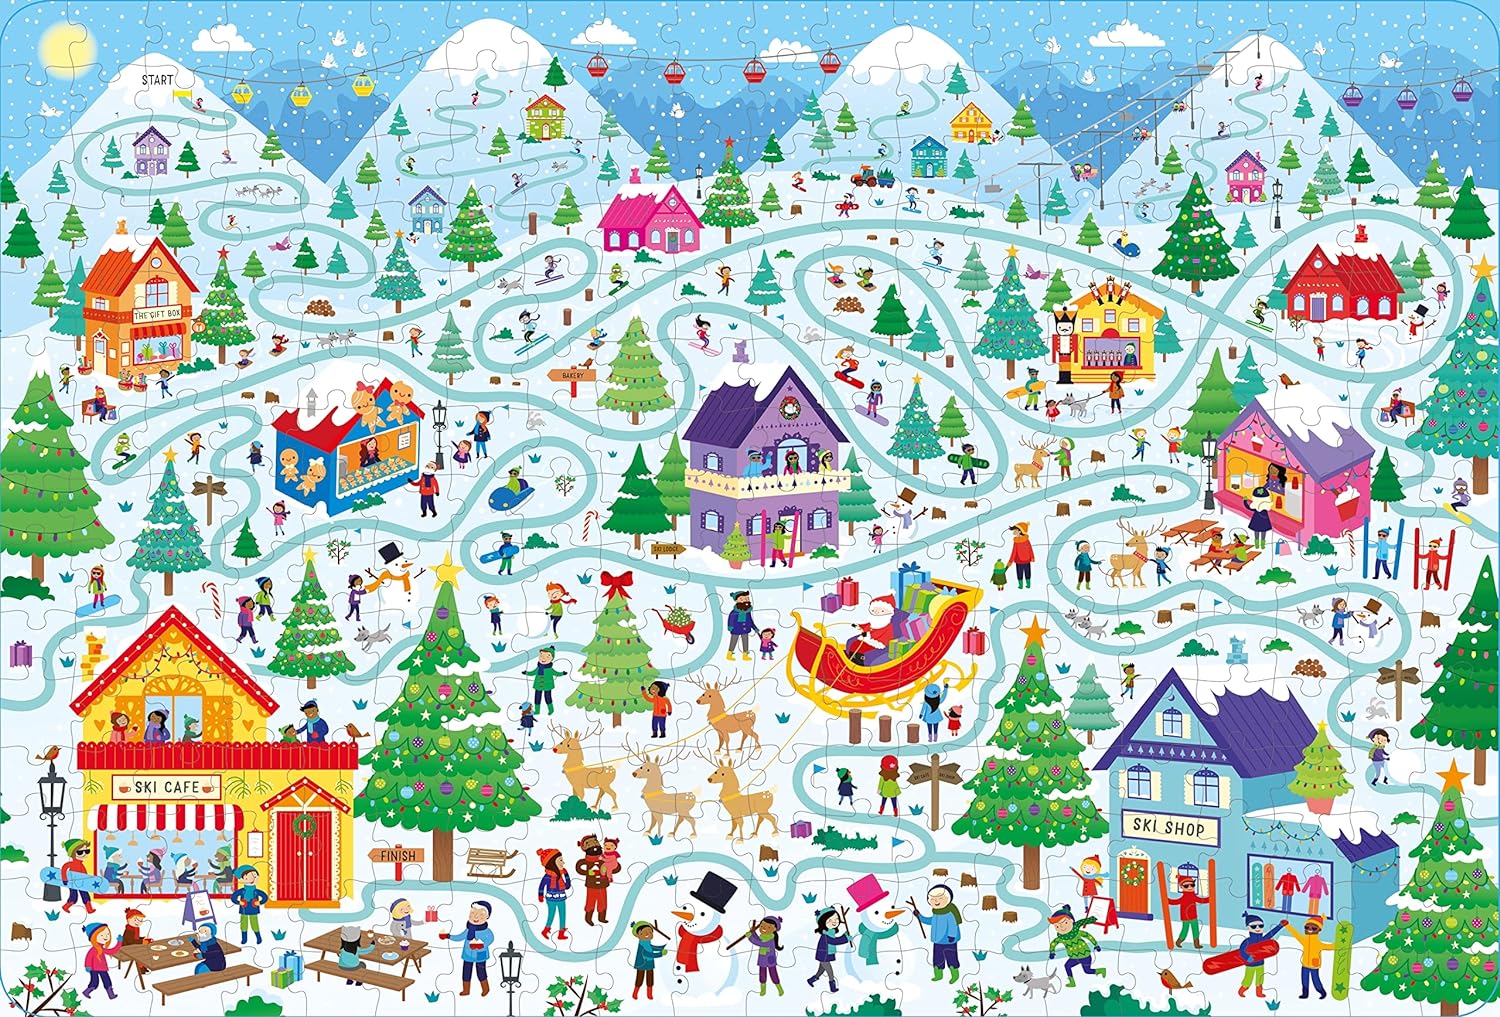 Christmas Maze | Usborne